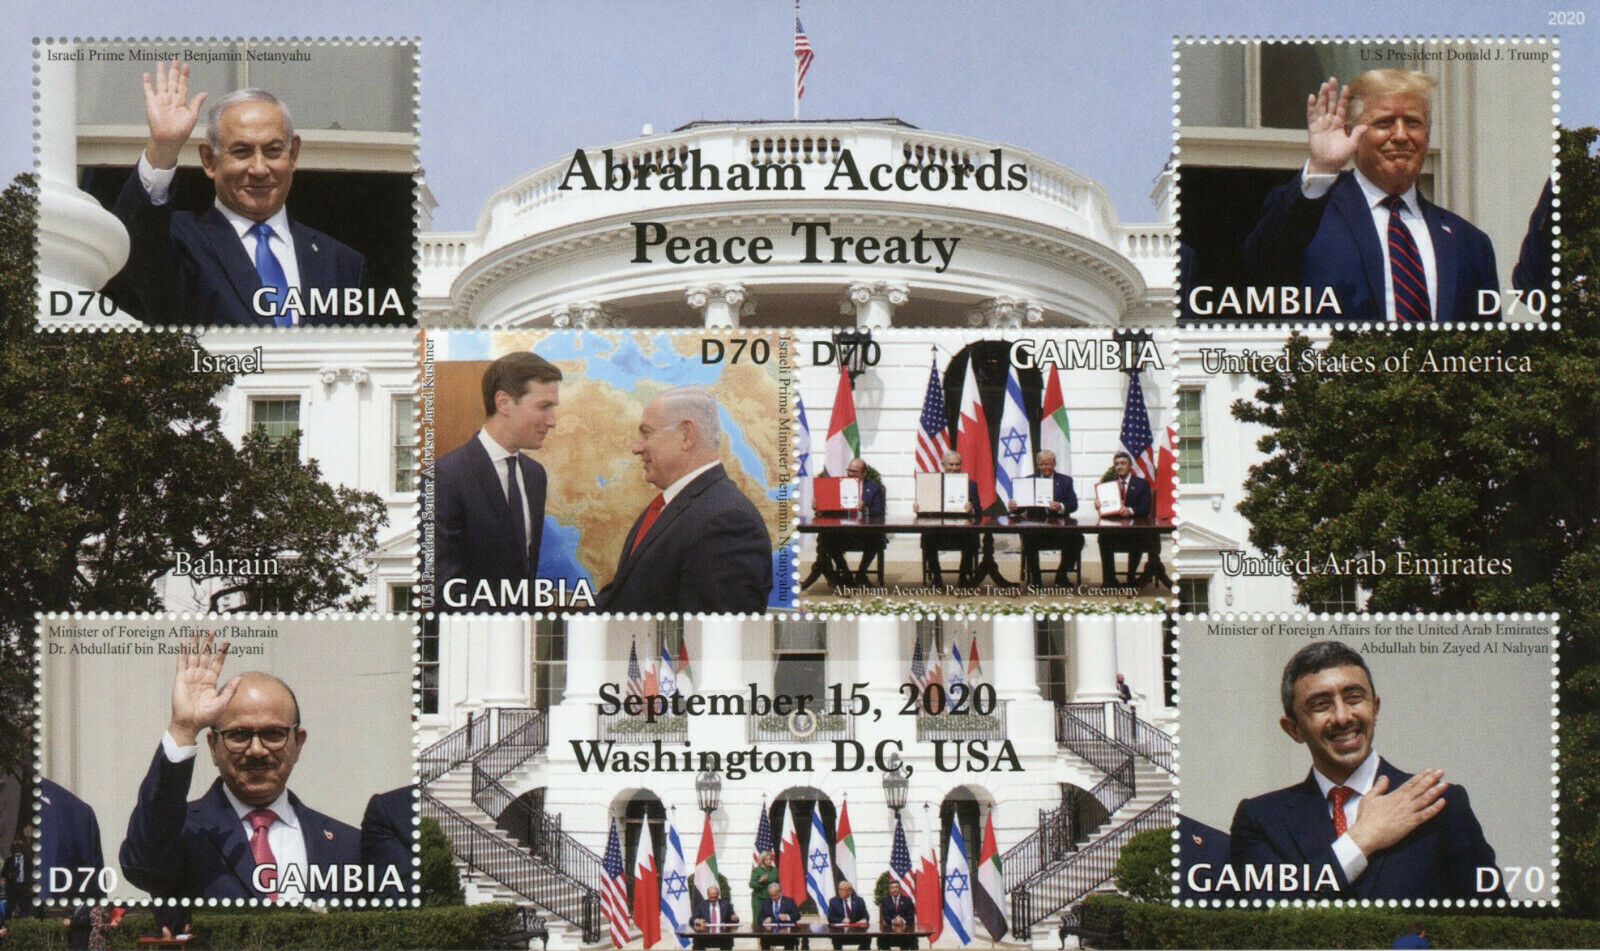 Gambia 2020 MNH Donald Trump Stamps Abraham Accords Peace Treaty Donald Trump Netanyahu US Presidents People 6v MS